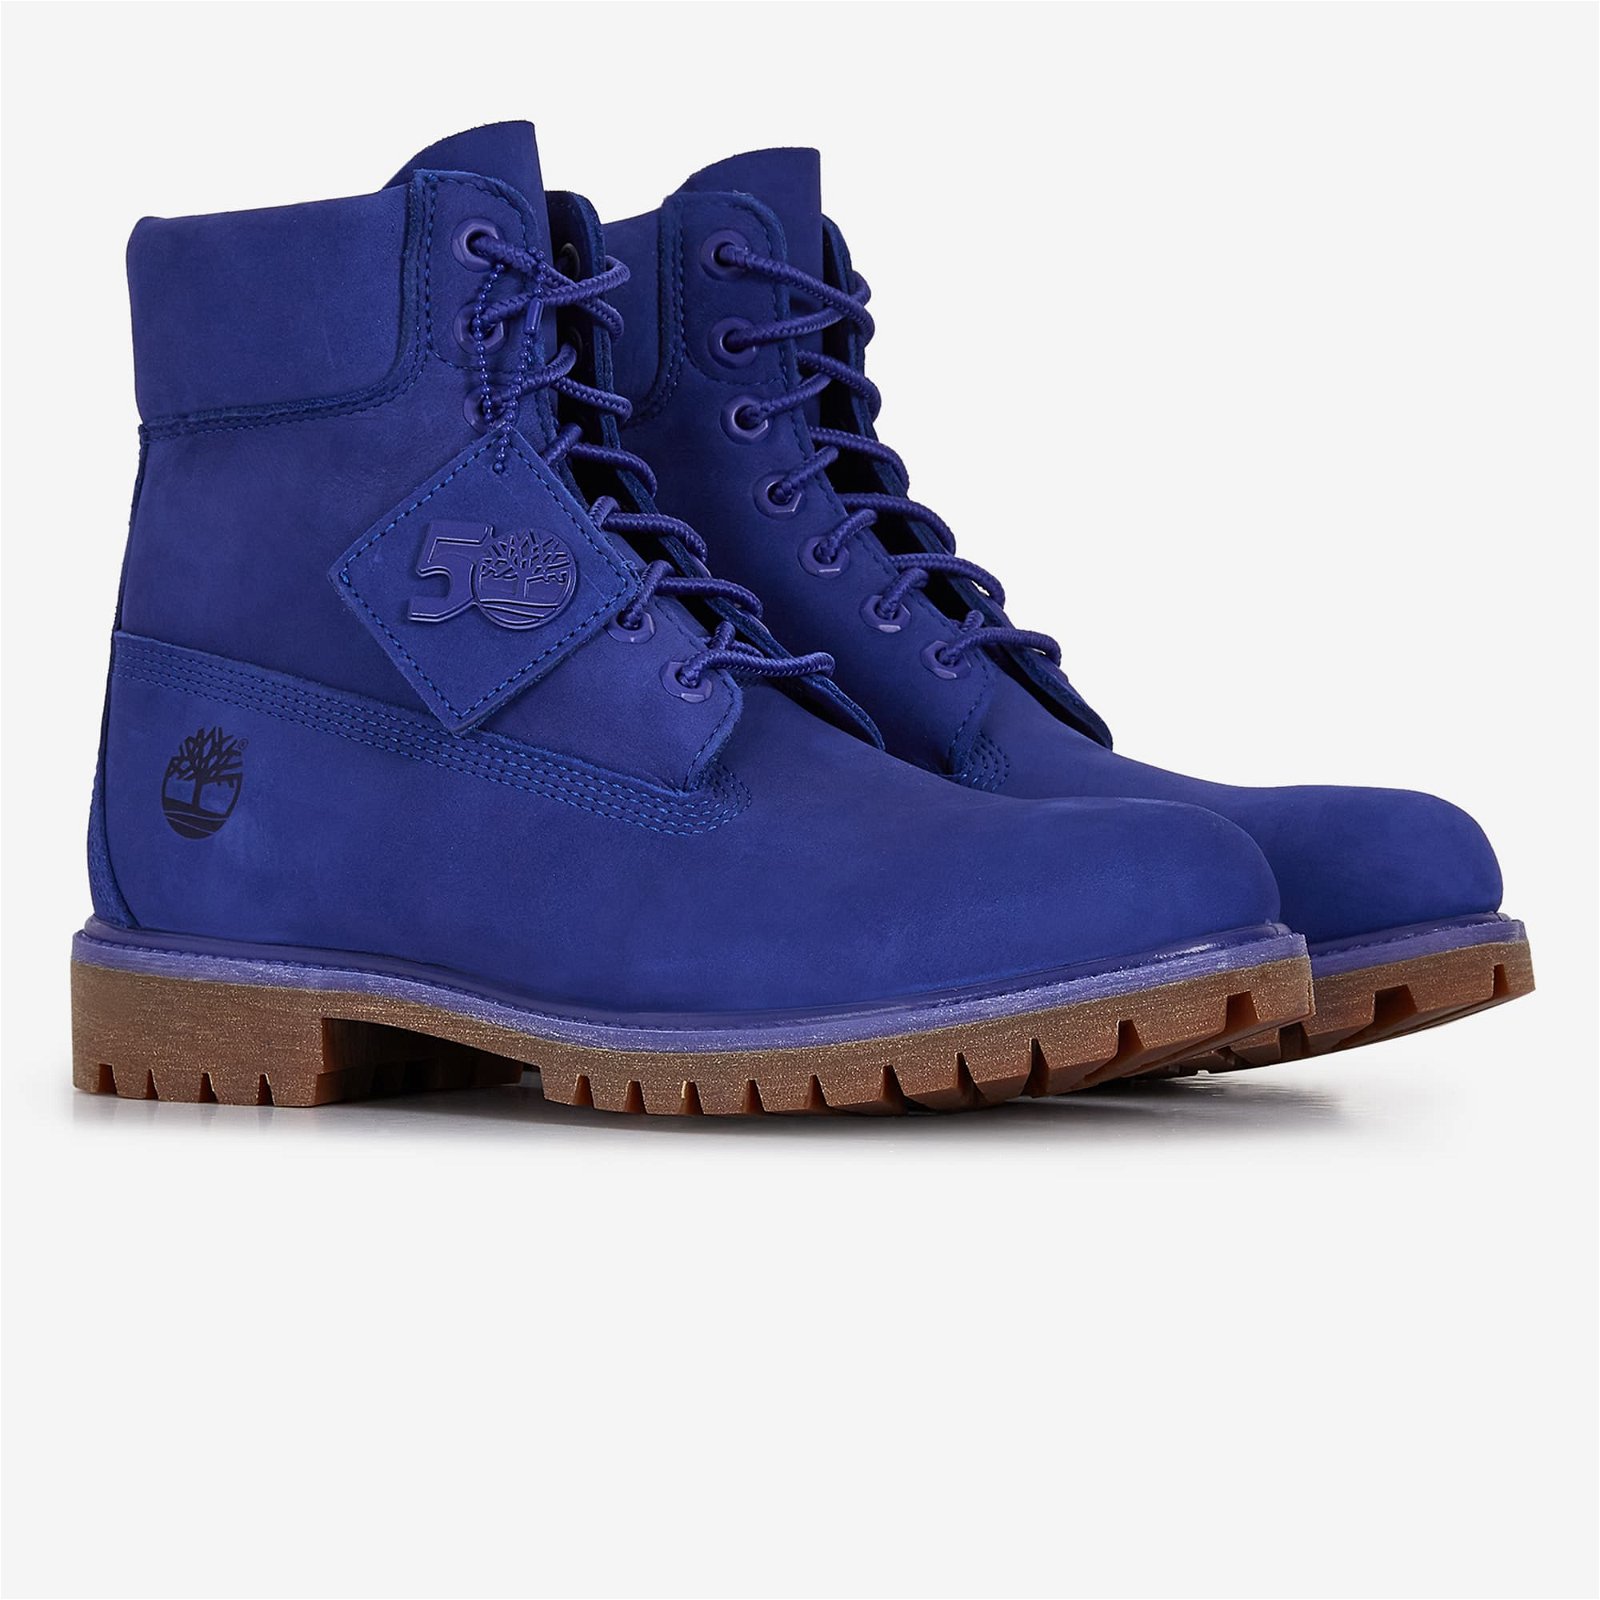 6 Inch Premium Boots "Clematis Blue"